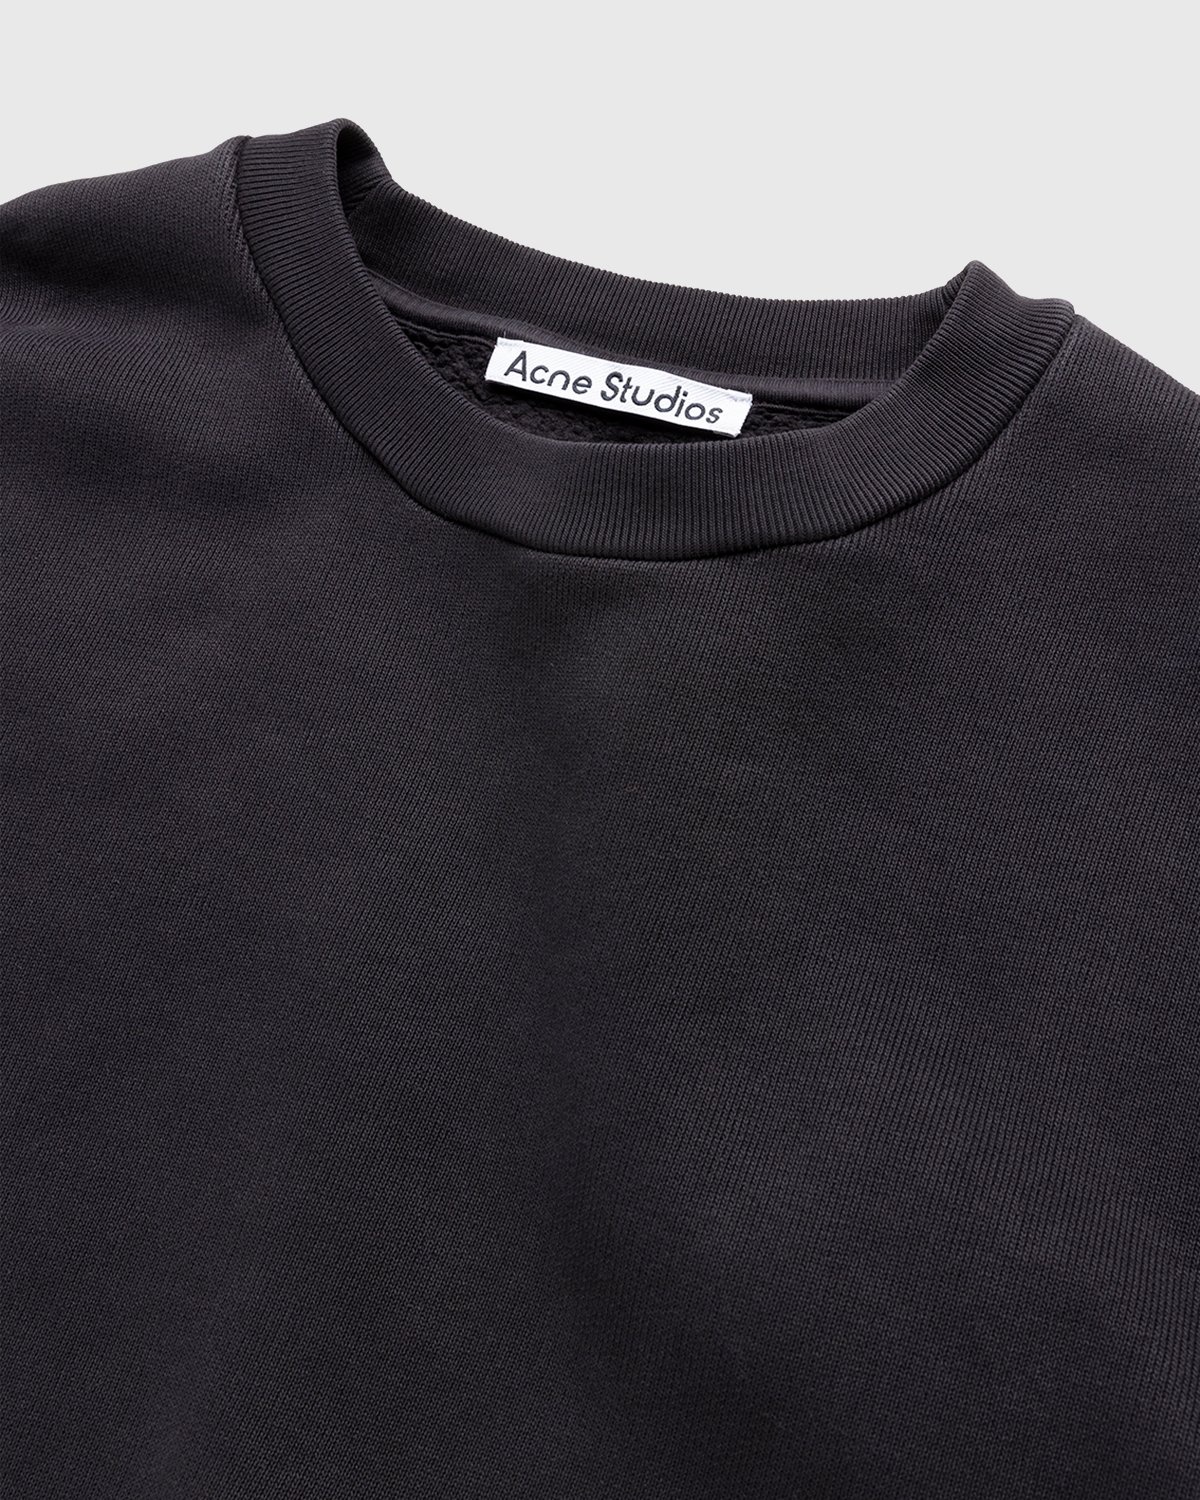 Acne Studios – Logo Sweatshirt Black - Sweats - Black - Image 4